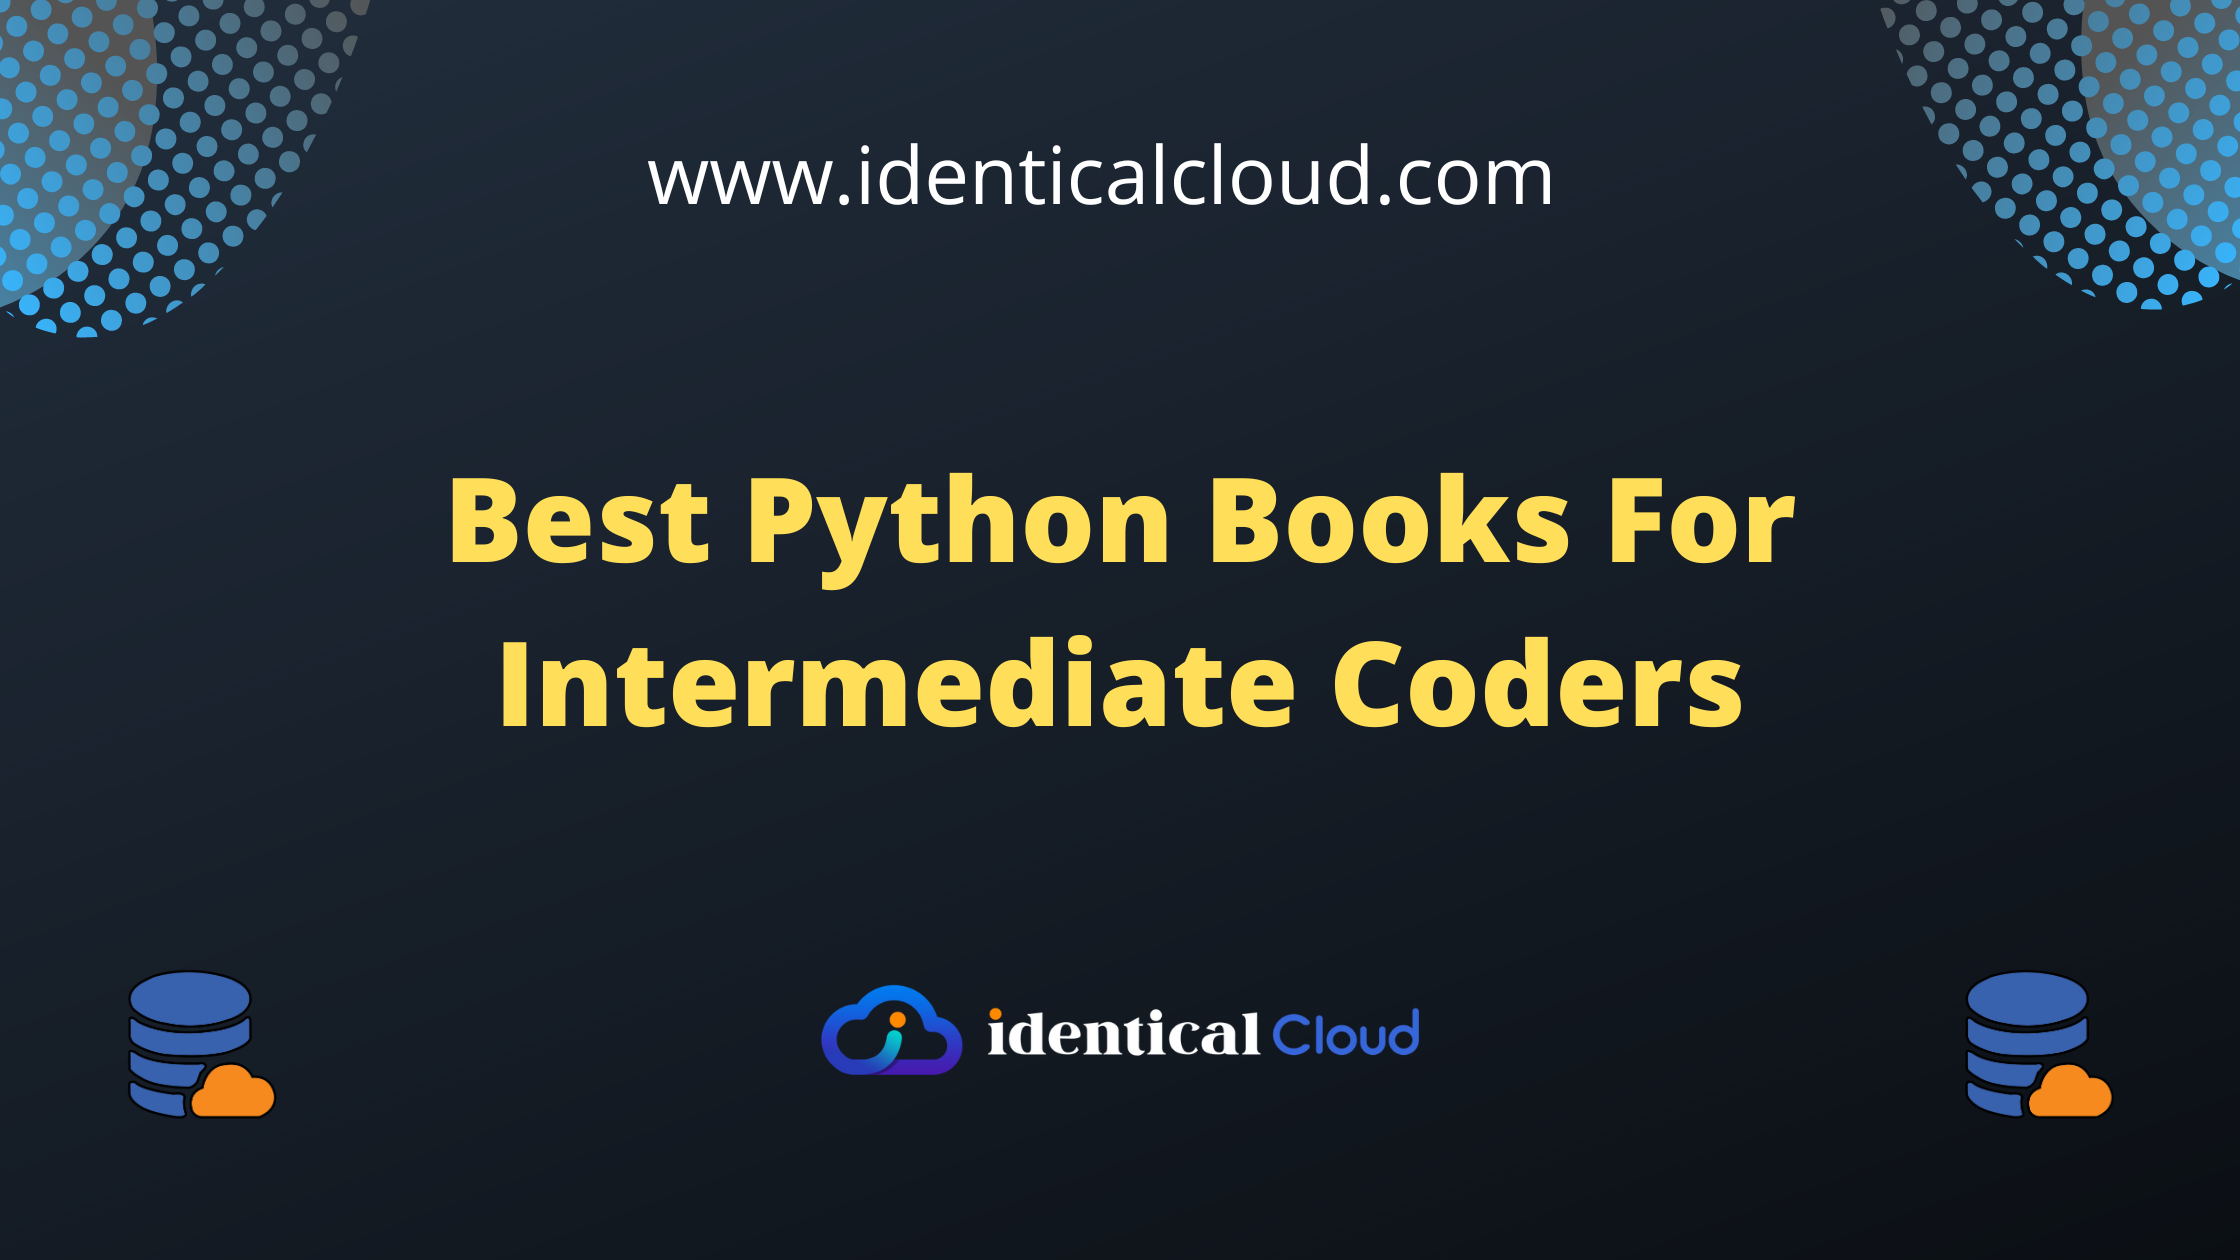 Best Python Books For Intermediate Coders - identicalcloud.com